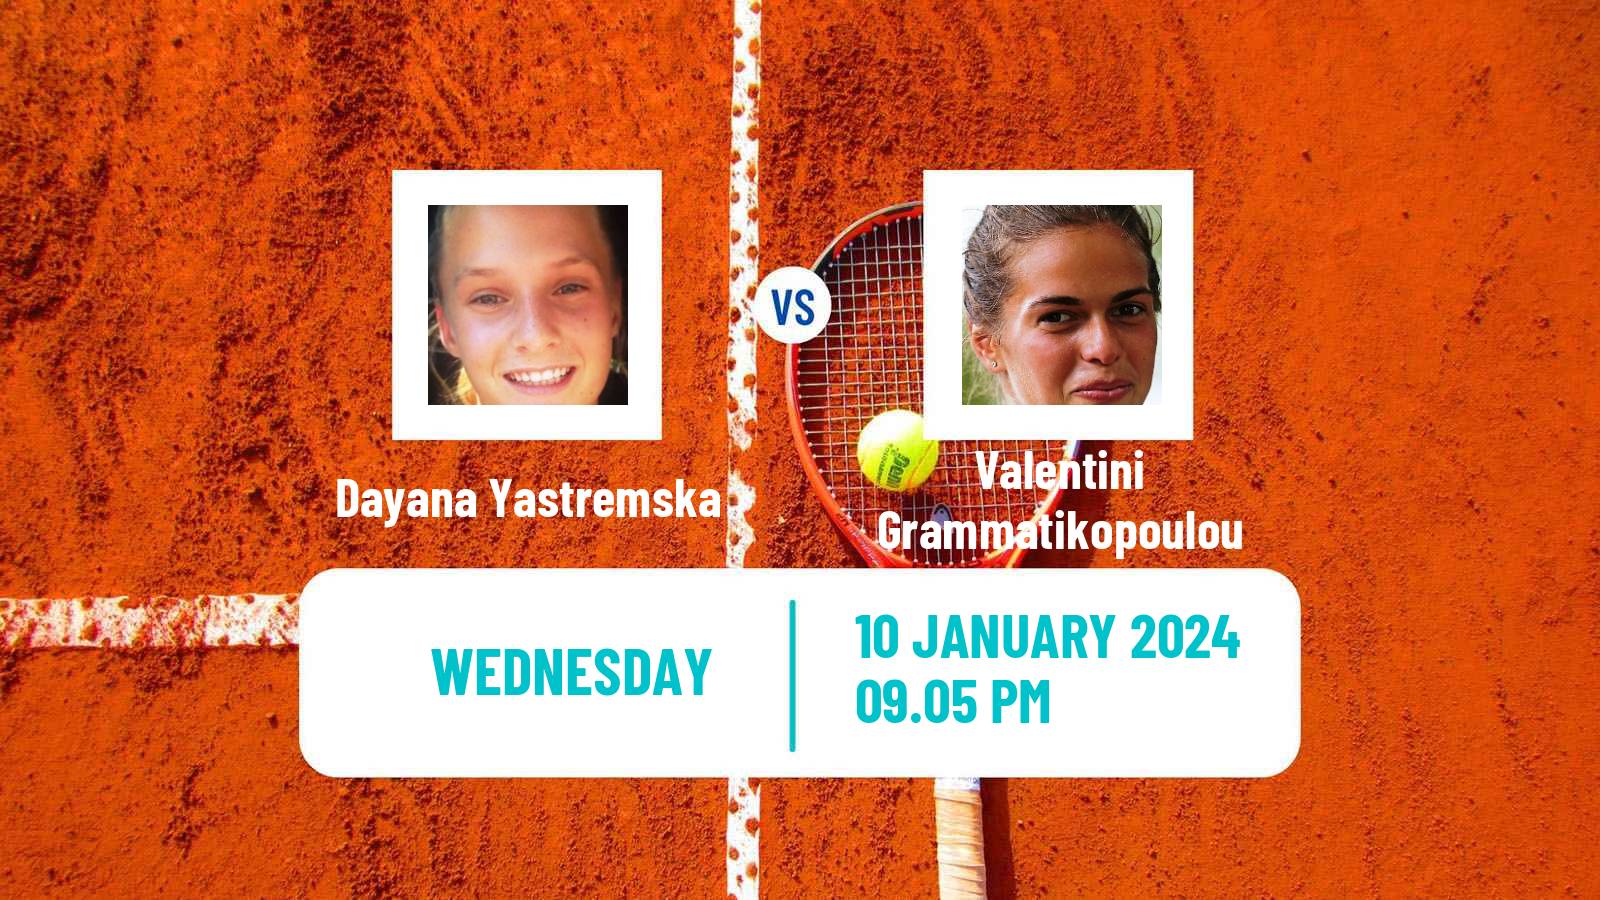 Tennis WTA Australian Open Dayana Yastremska - Valentini Grammatikopoulou